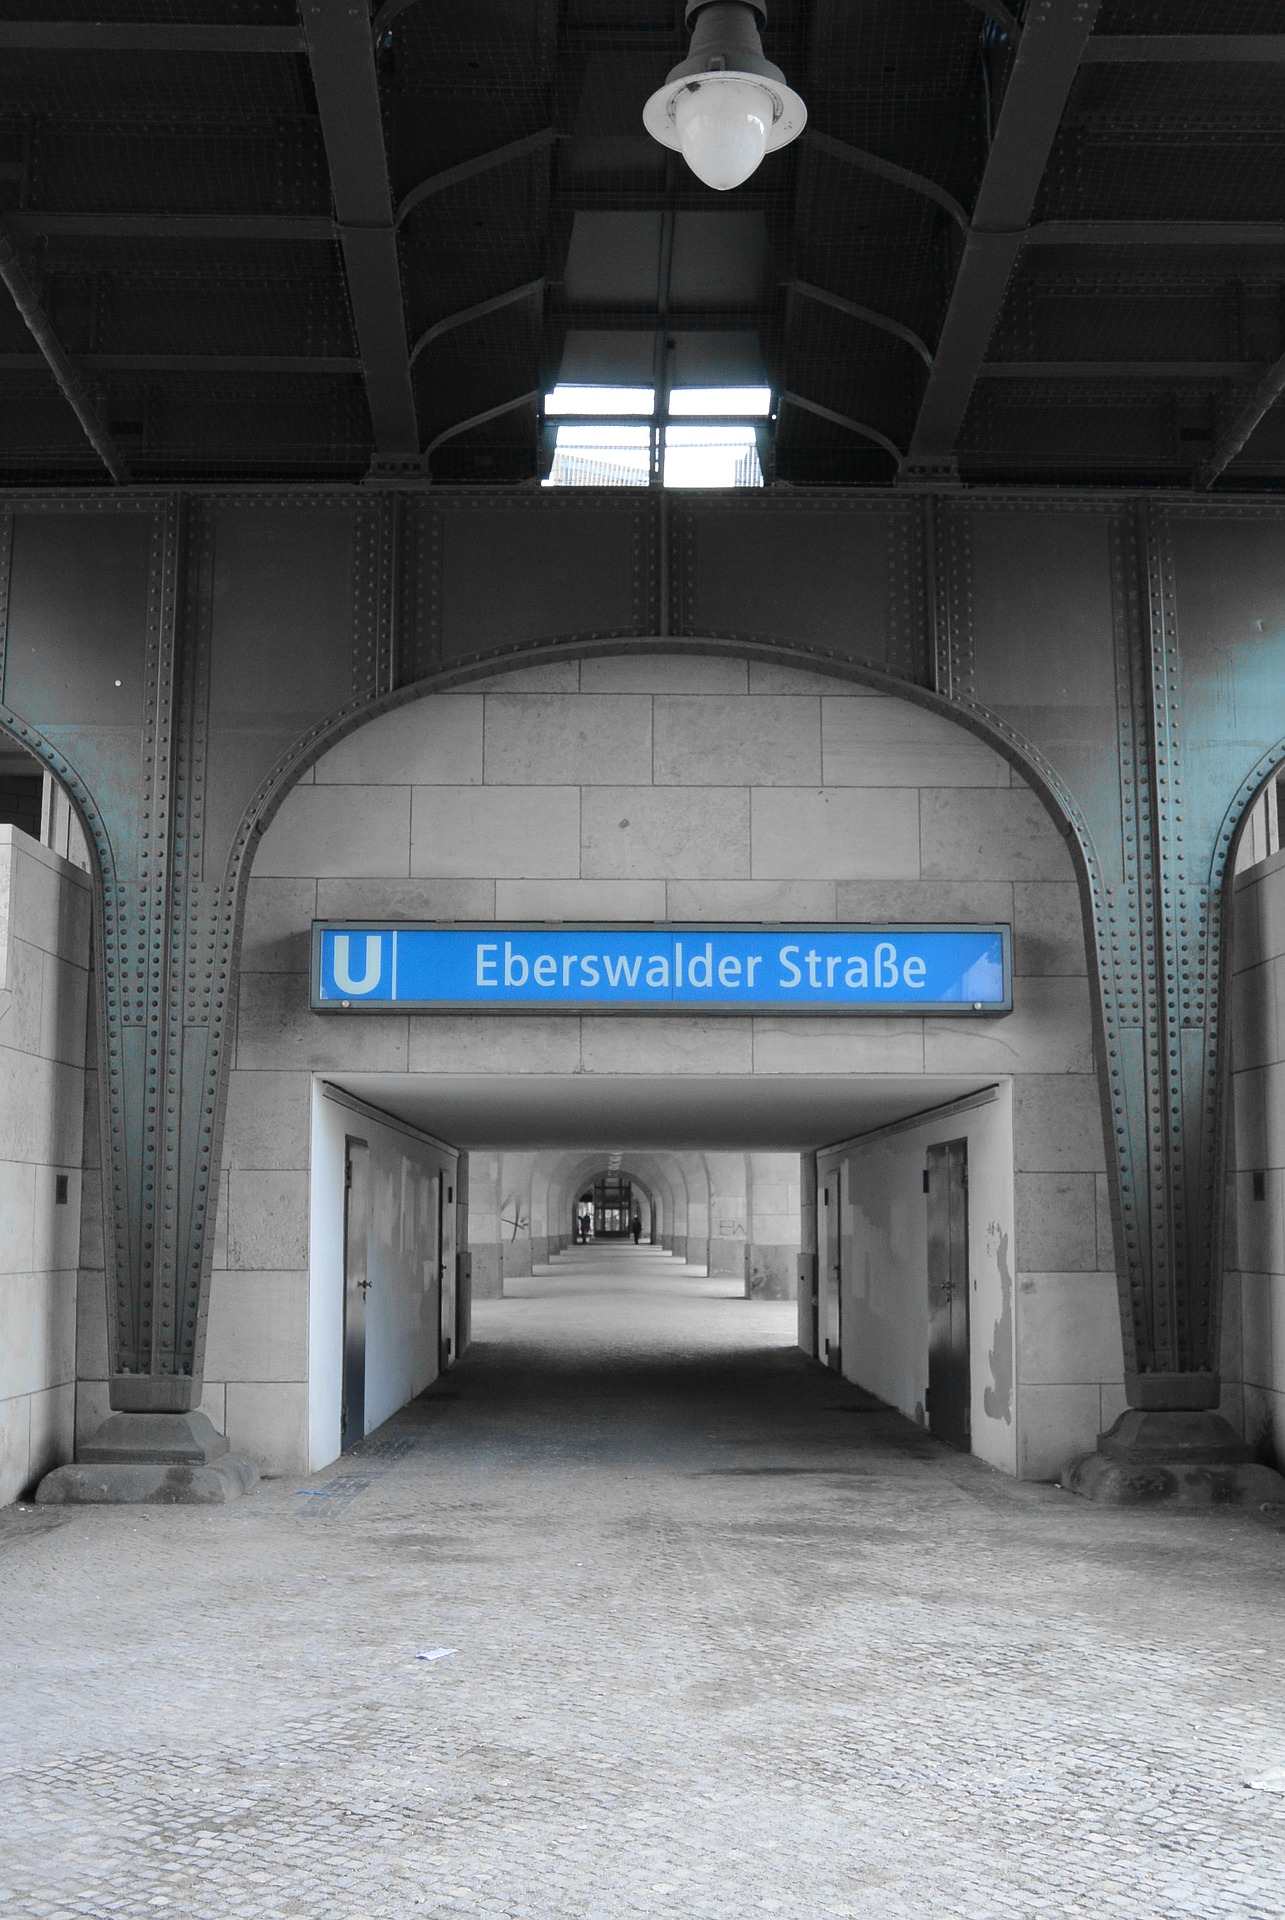 Eberswalder Straße oggi ©pixabay